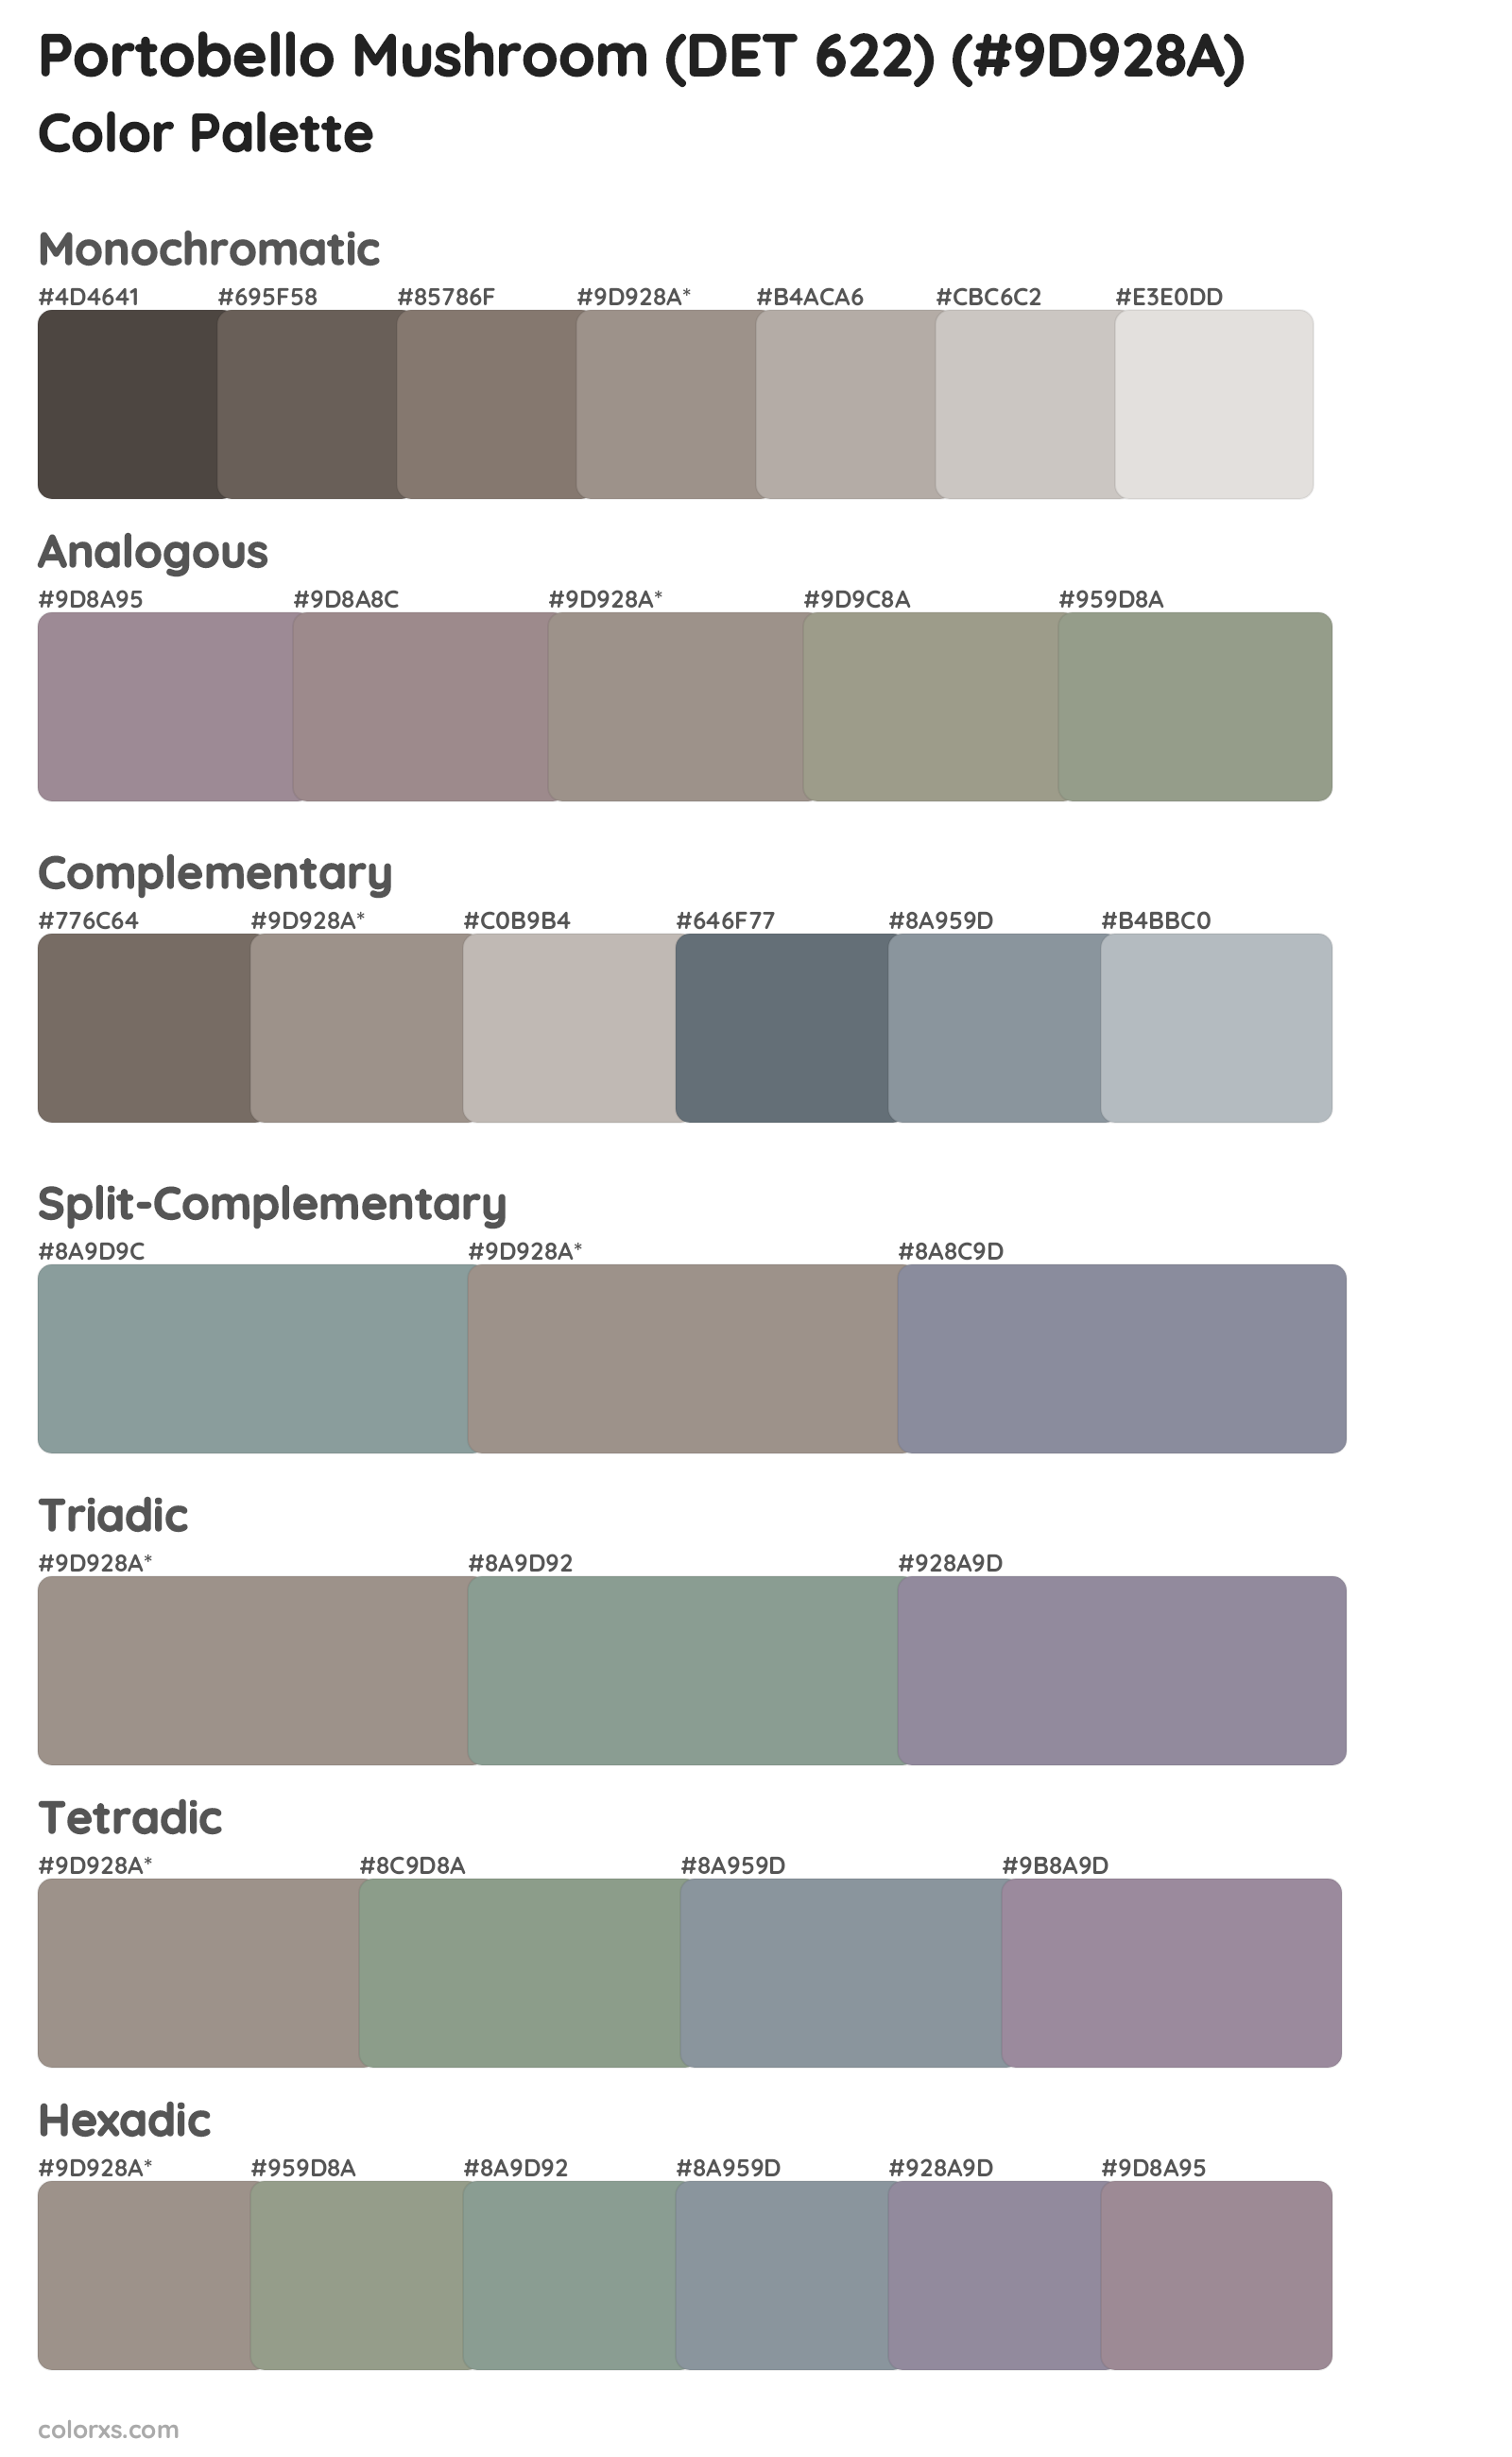 Portobello Mushroom (DET 622) Color Scheme Palettes